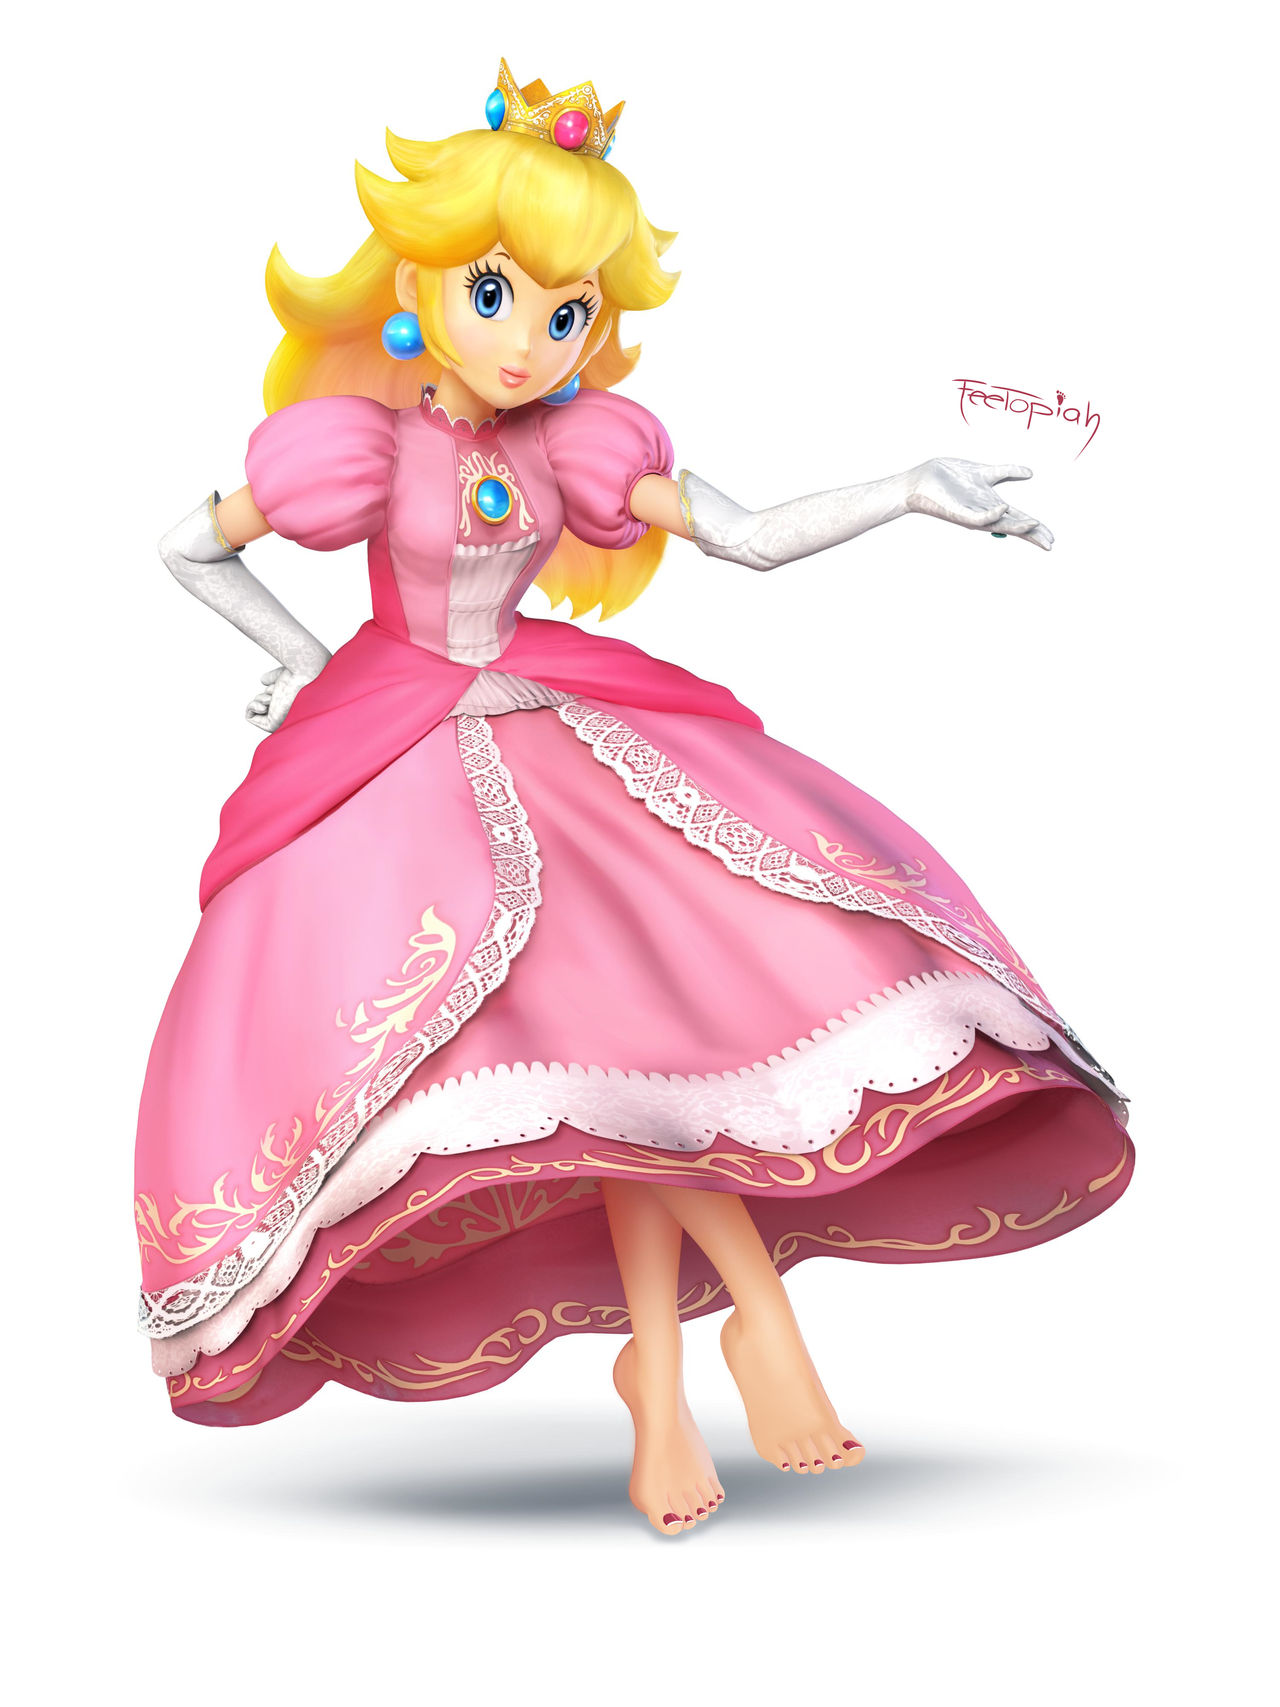 Super Smash Bros. Wii U - Barefoot Princess Peach by Feetopiah on ...